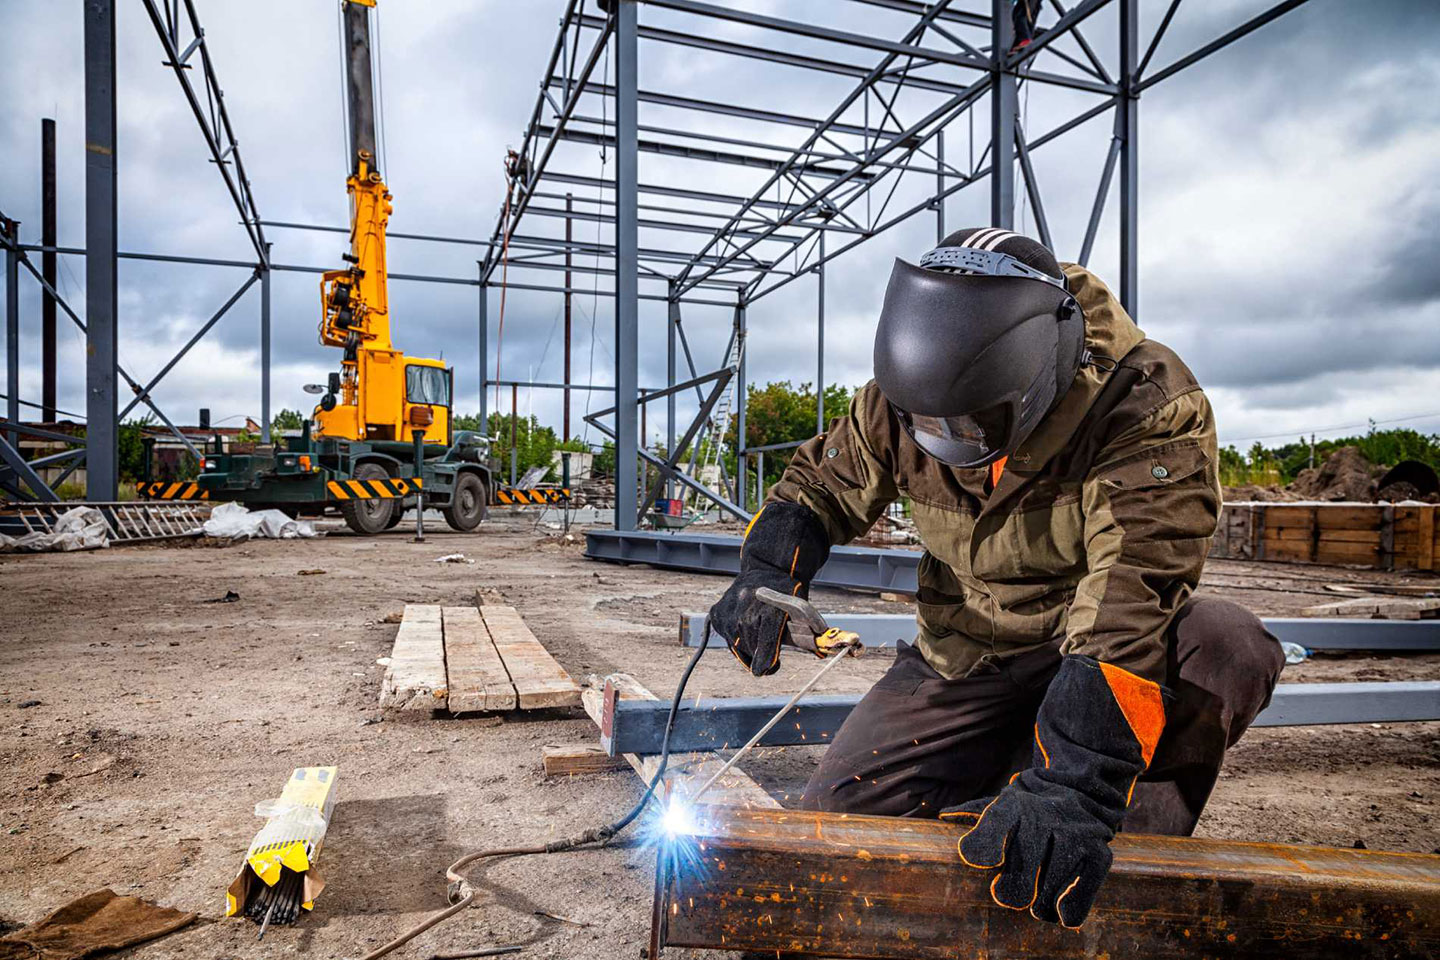 A man welding at a construction site.